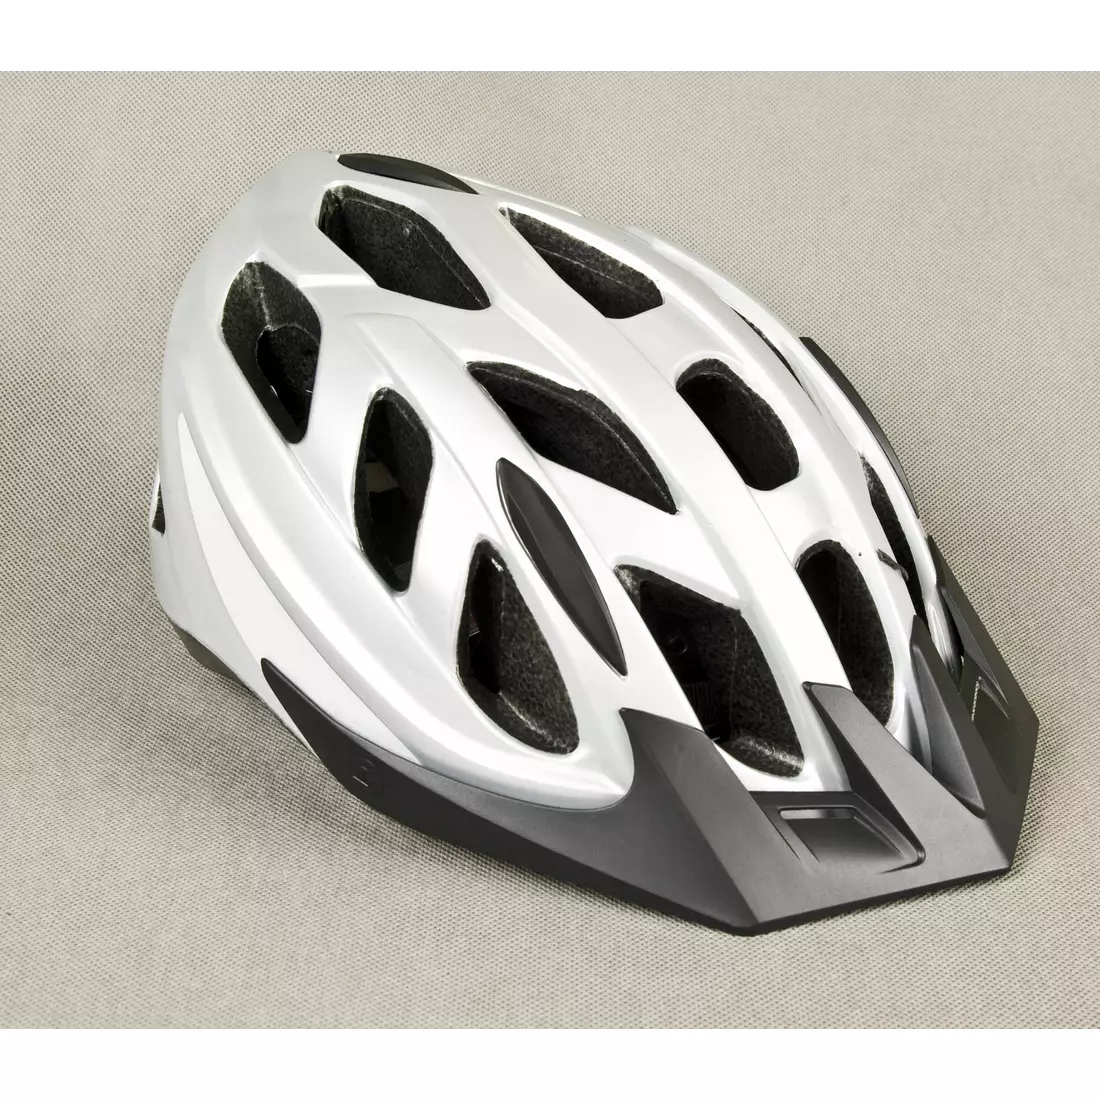 LAZER - CYCLONE MTB-Fahrradhelm, Farbe: Silber